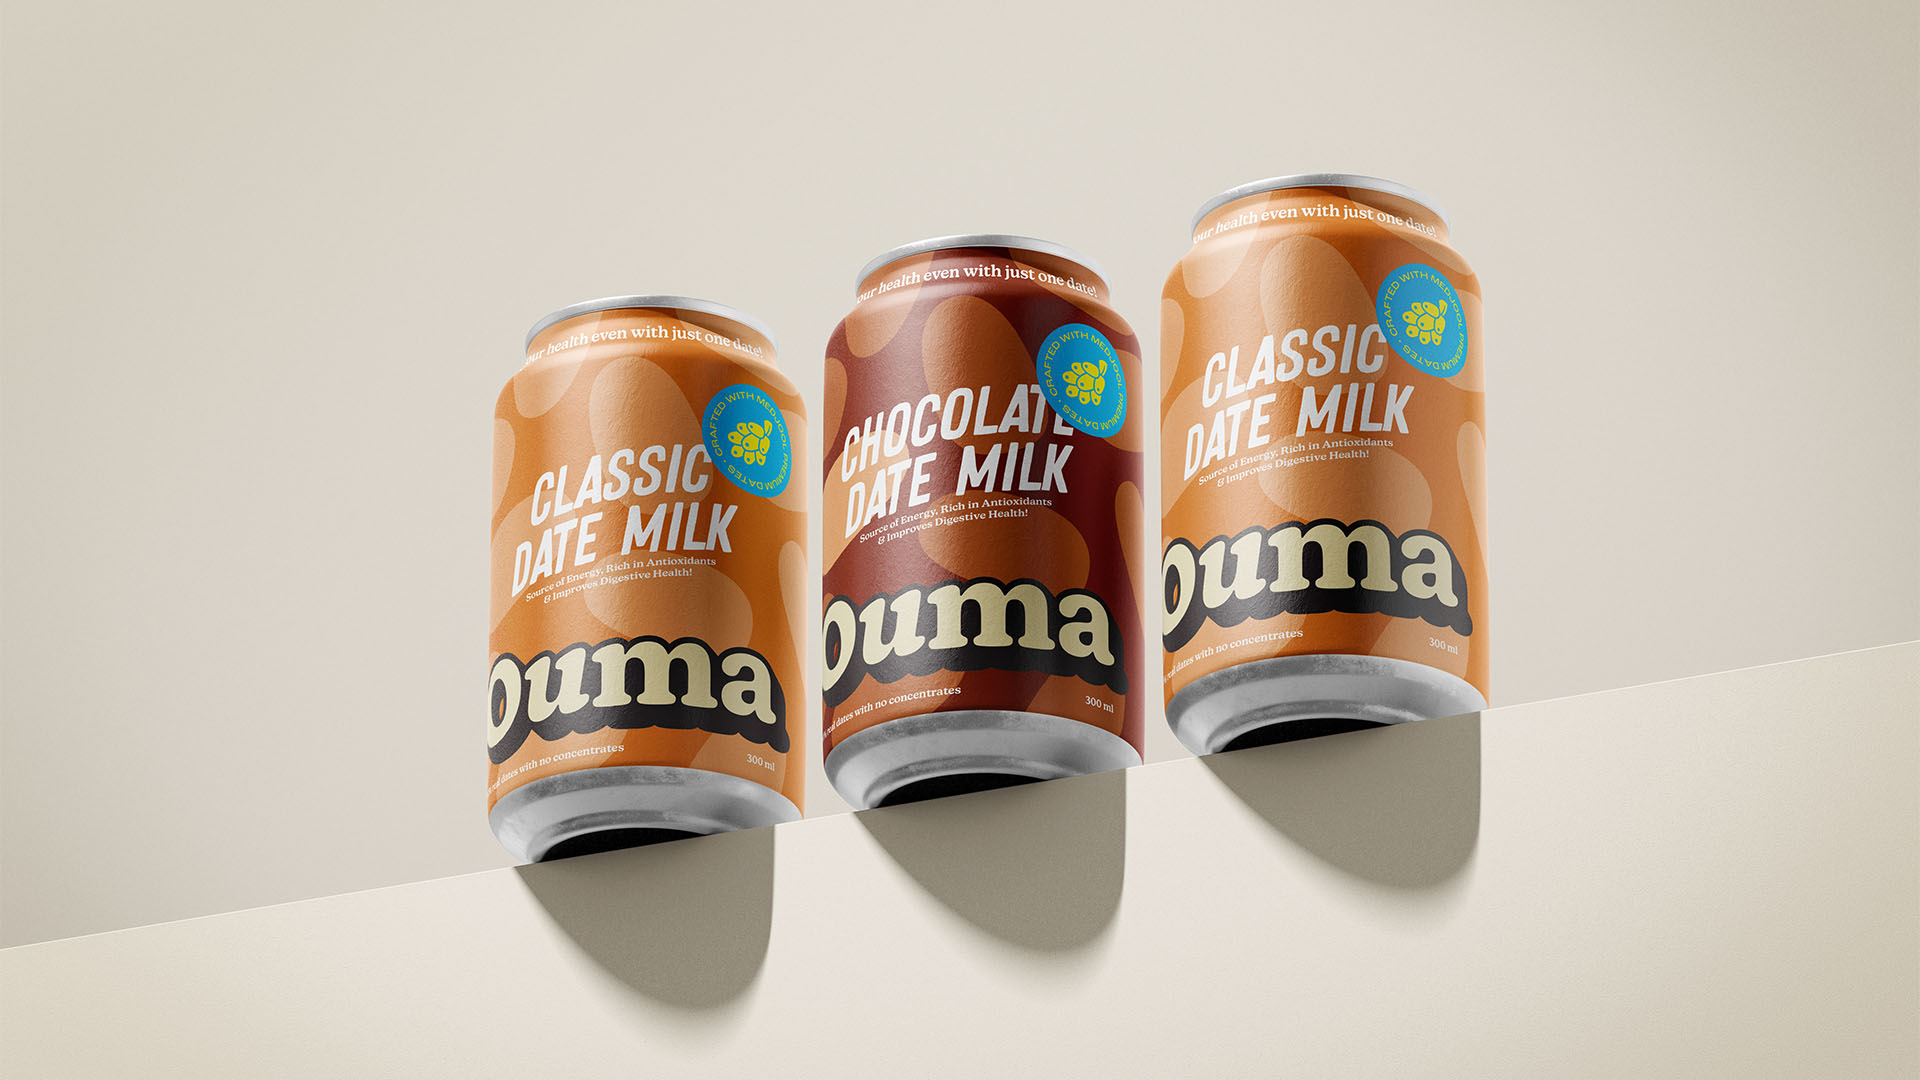 Widarto Impact Crafts Nostalgic Branding for Ouma’s Premium Dairy Products